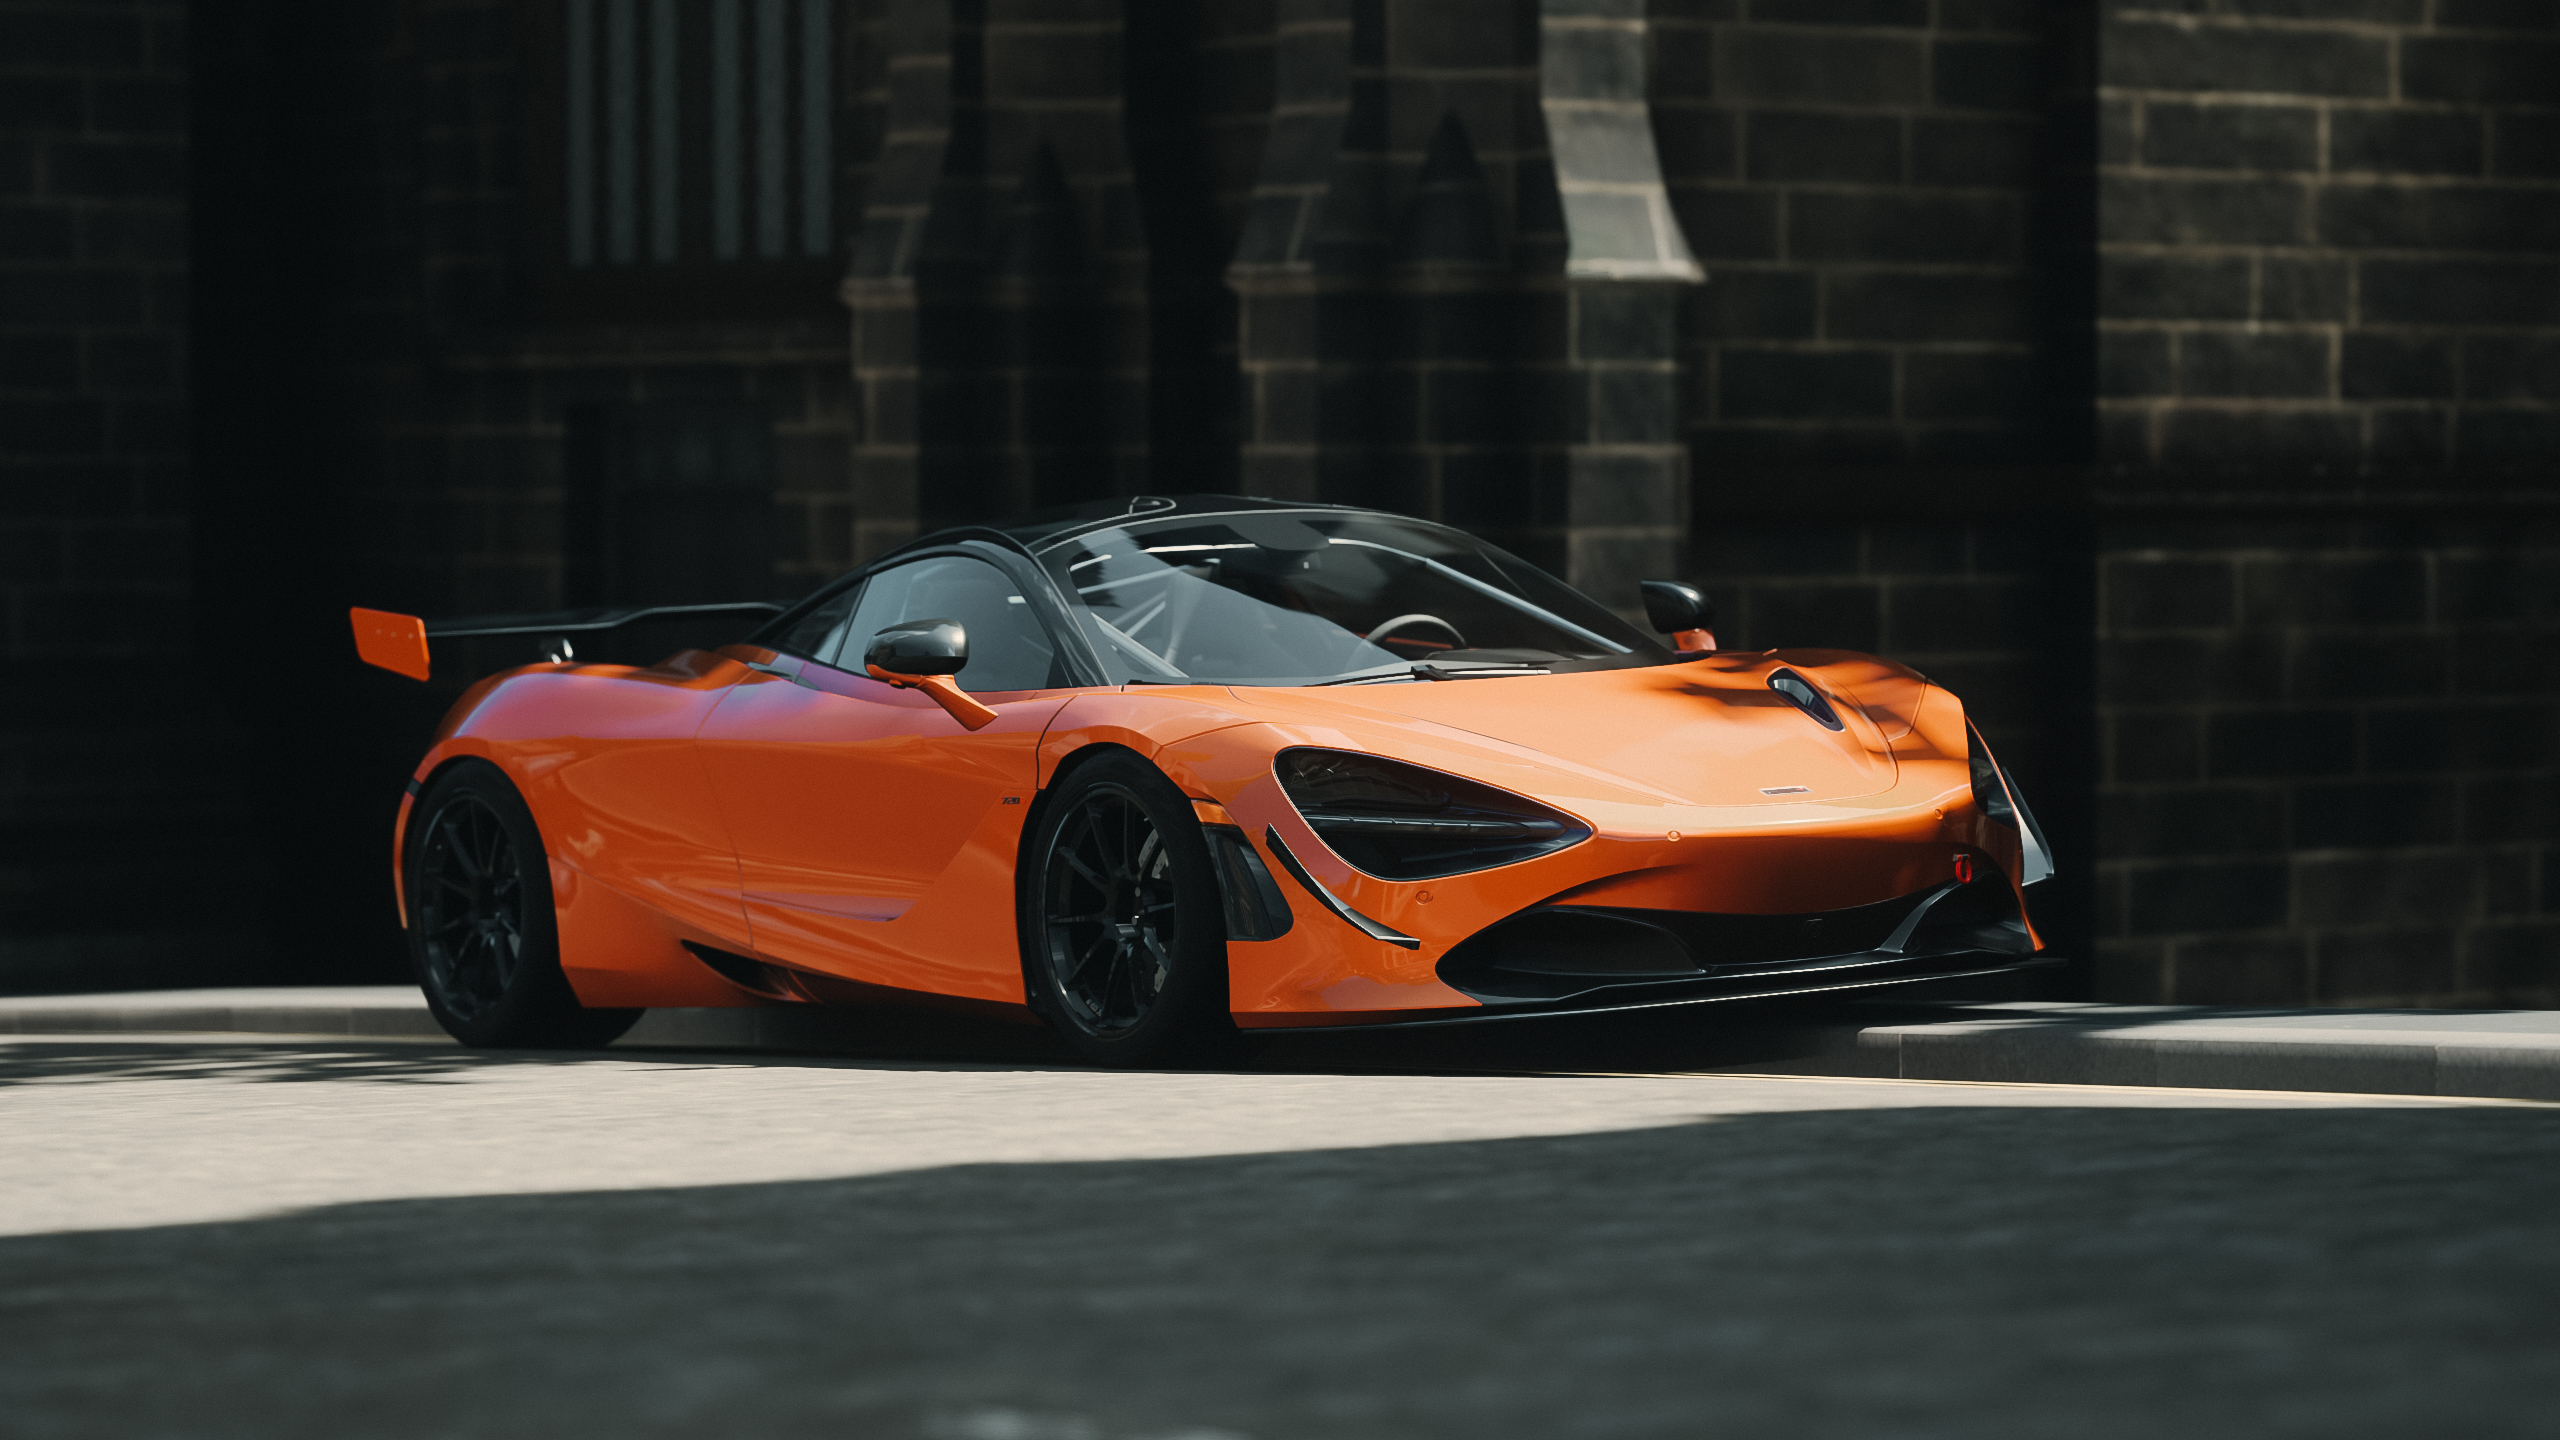 General 2560x1440 Forza Forza Horizon 4 video games Turn 10 Studios orange cars car vehicle supercars